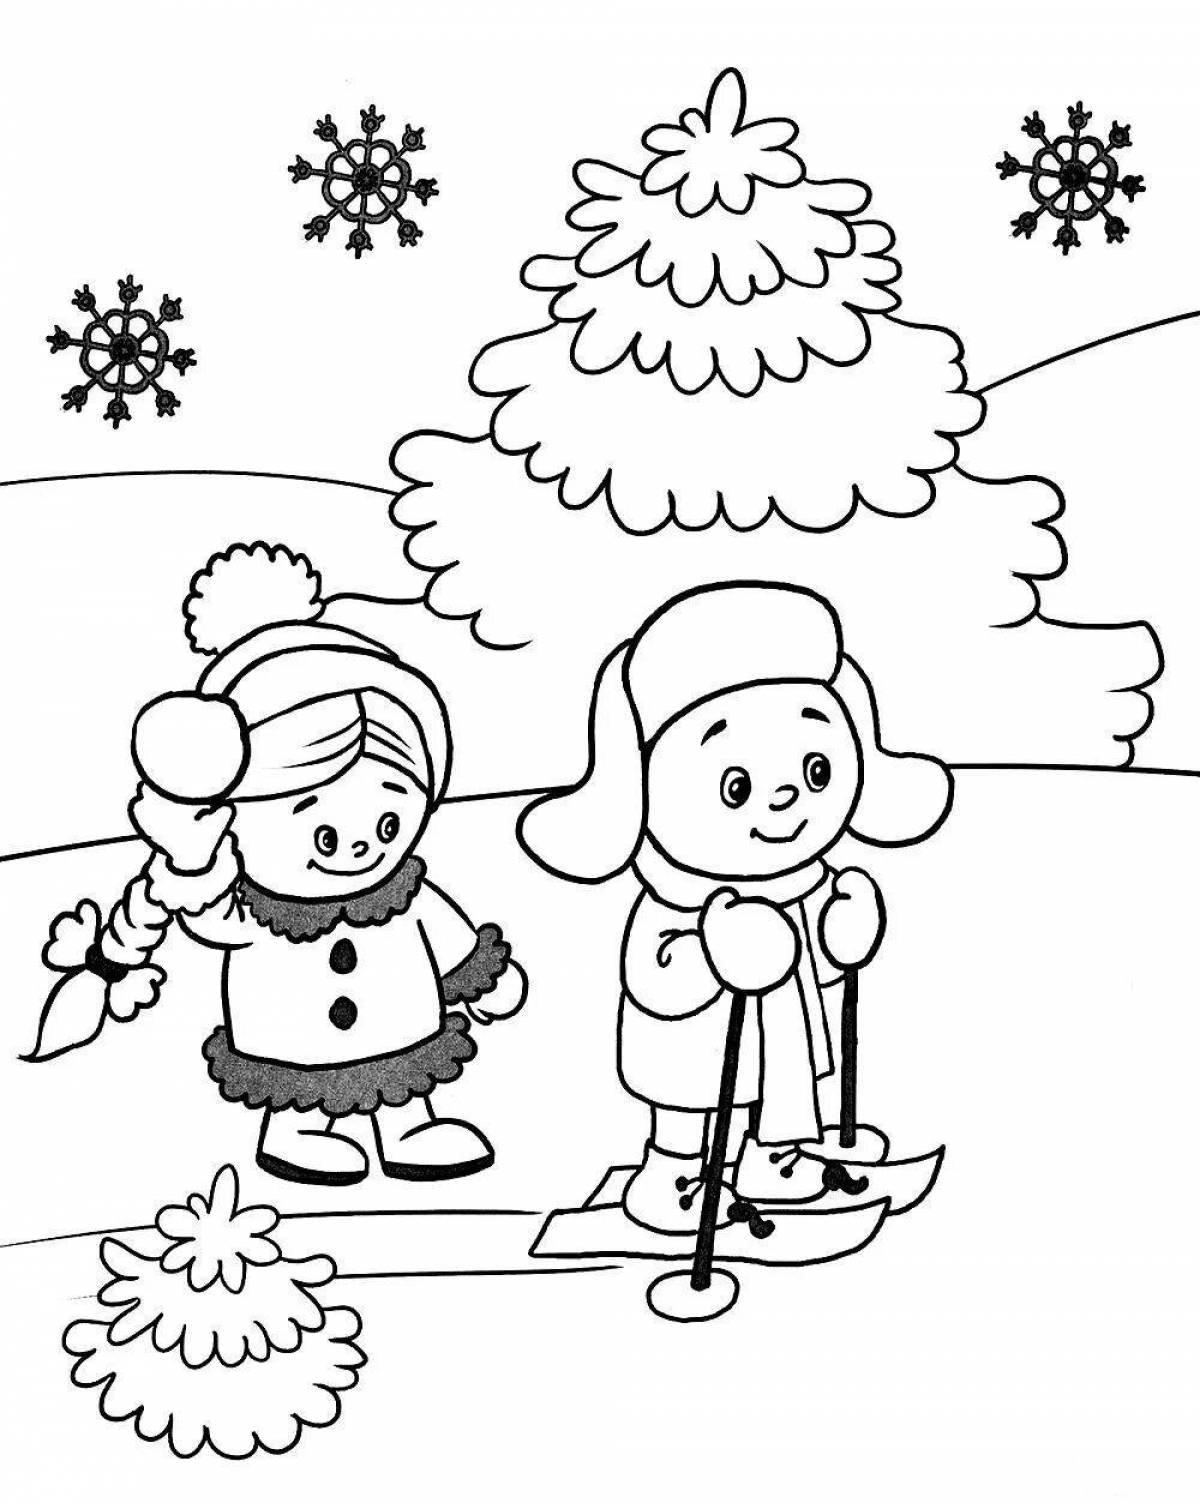 Luminous coloring pages children's winter activities